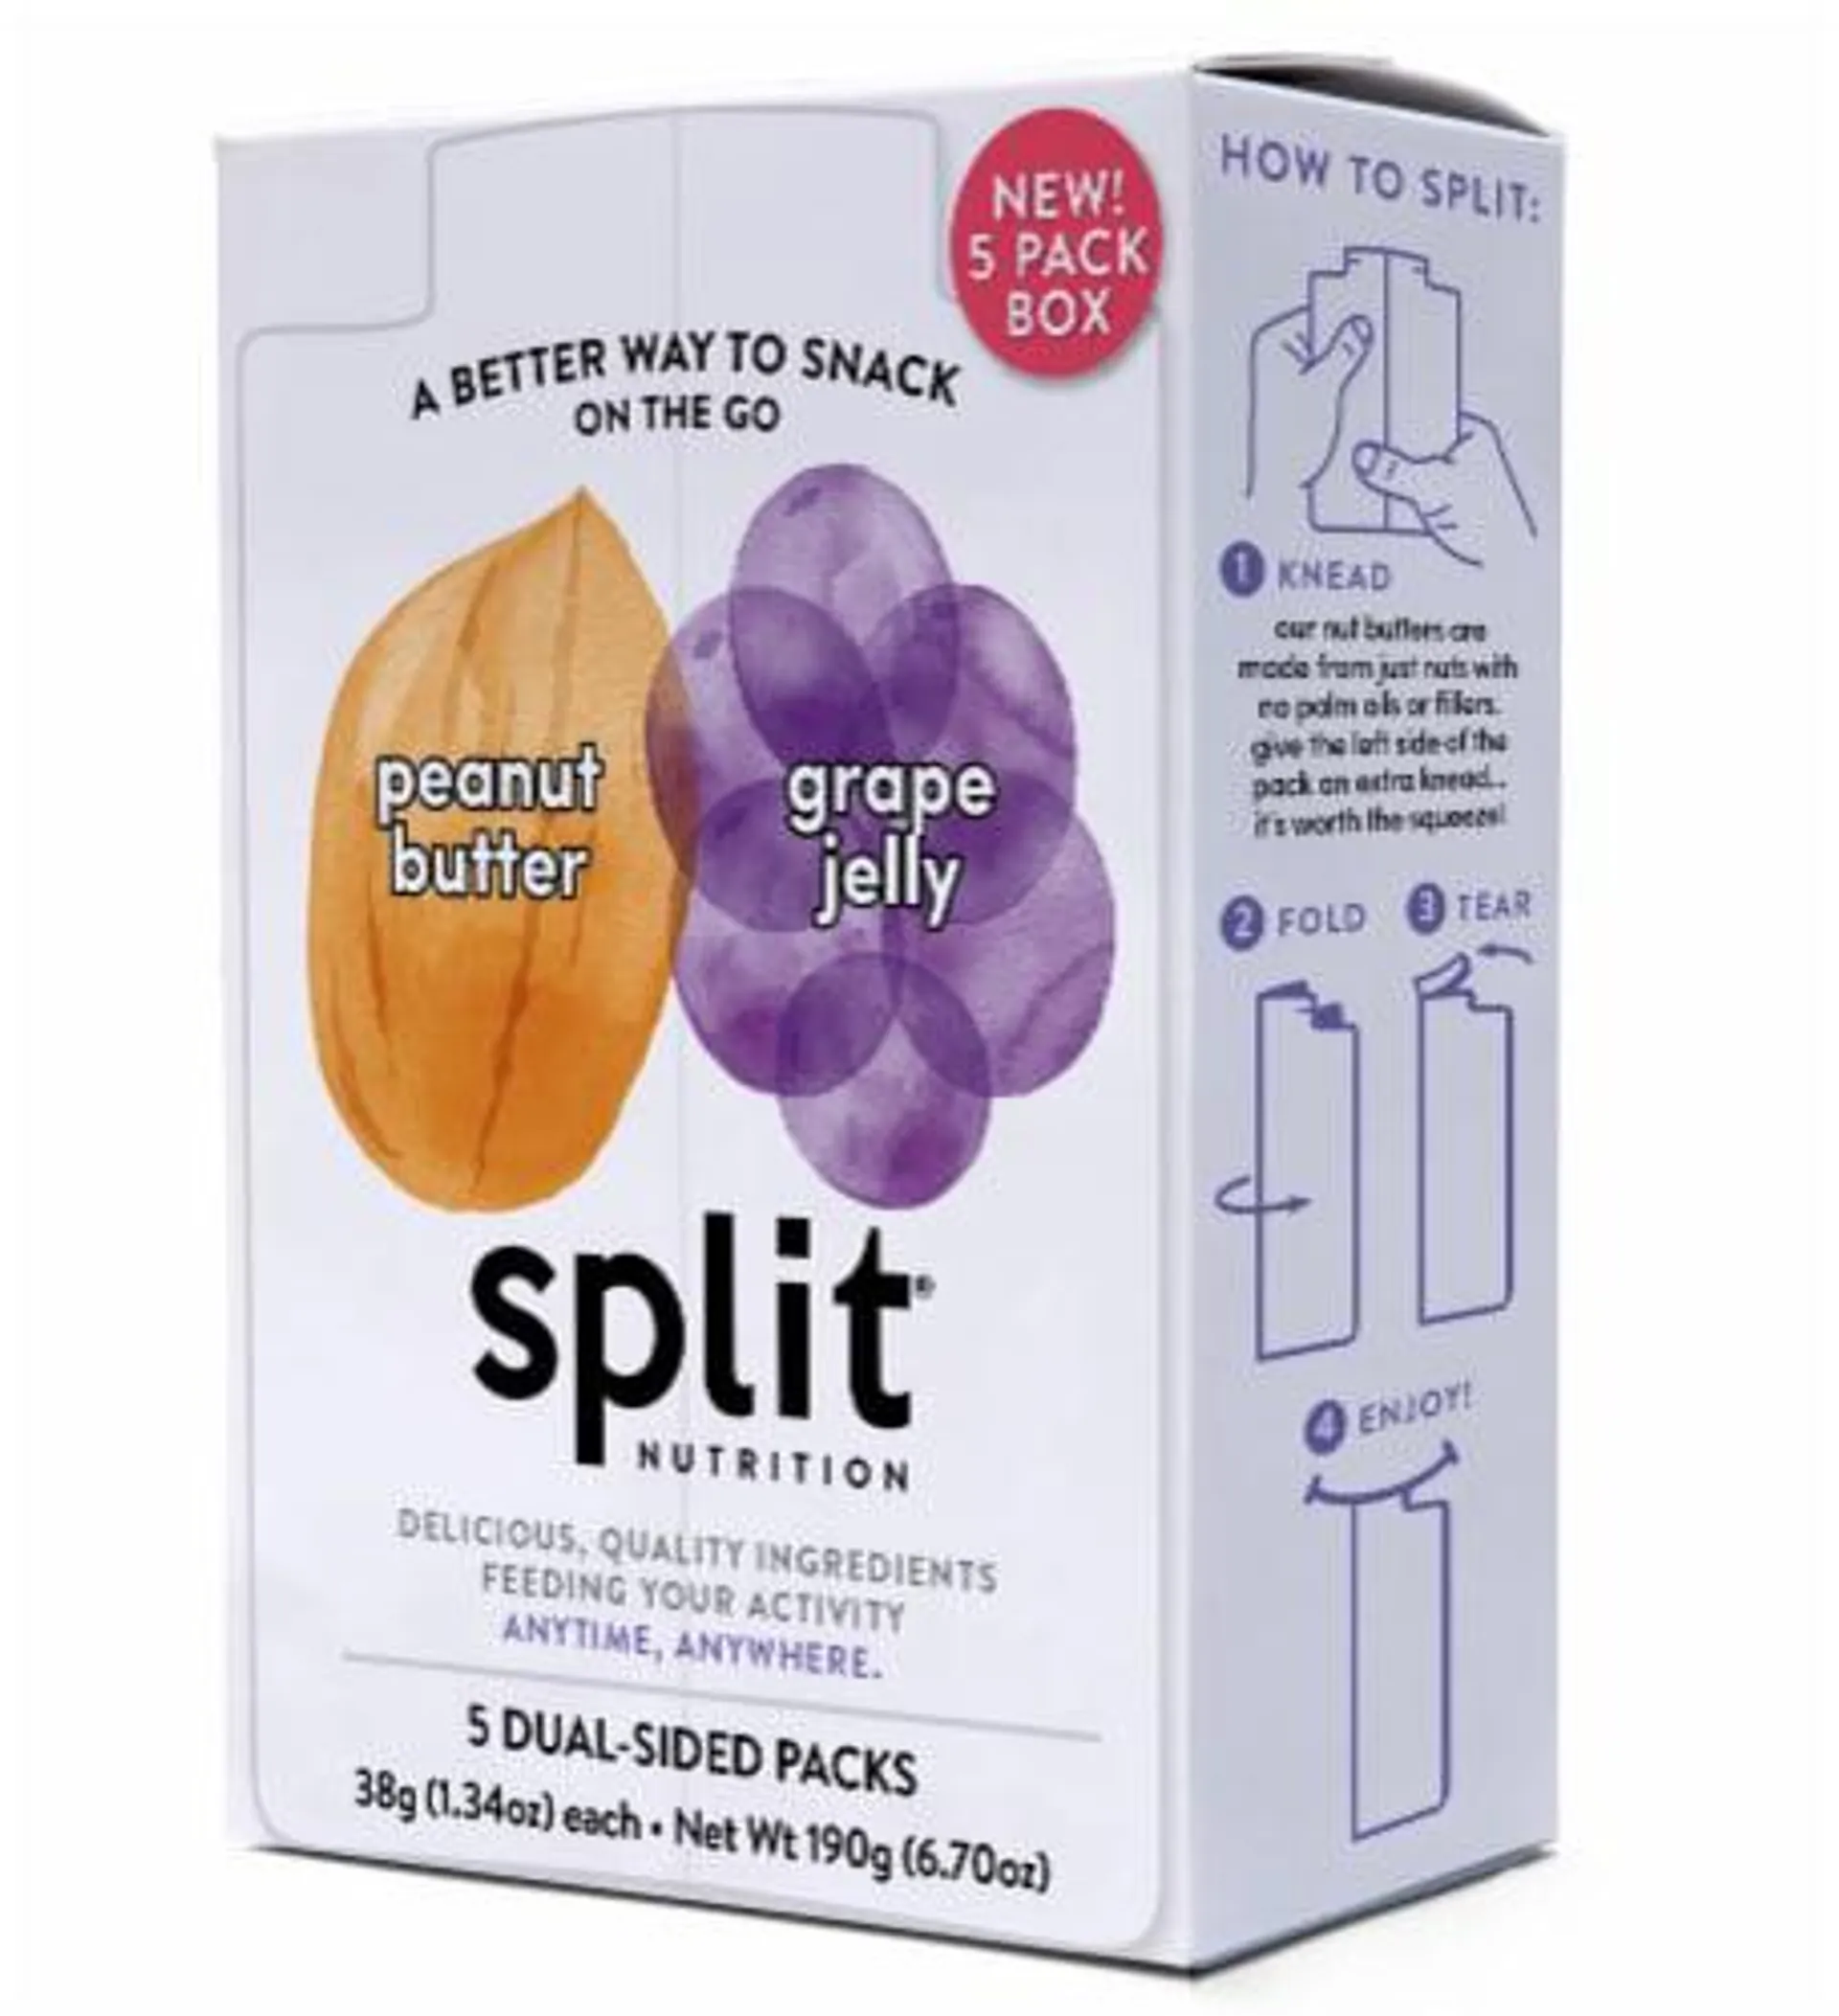 Split Nutrition® Peanut Butter & Grape Jelly Dual-Sided Packs